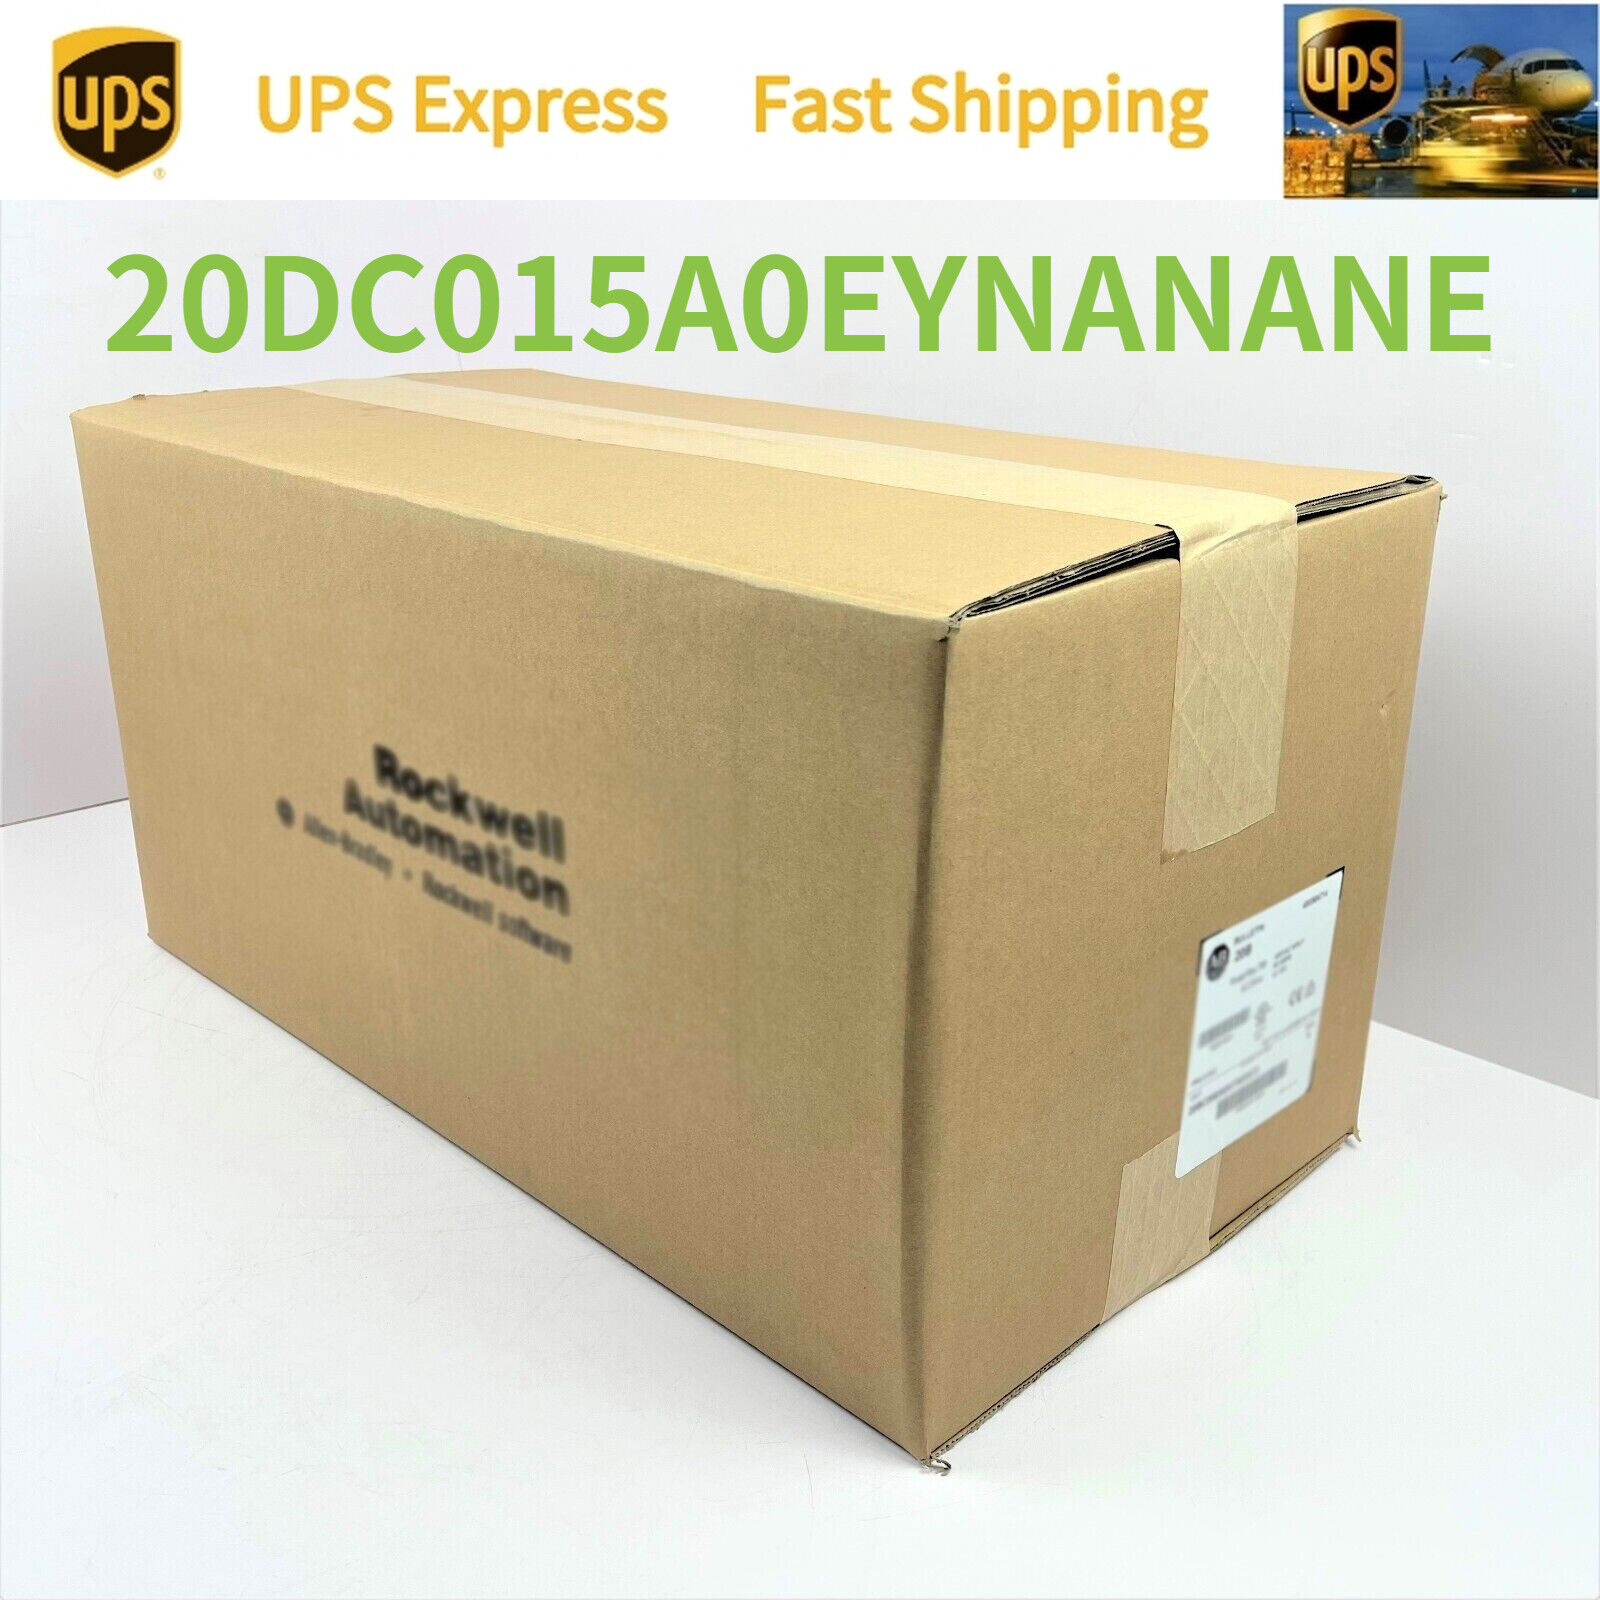 New AB 20DC015A0EYNANANE 20DC015A0EYNANANE UPS Expedited Shipping Spot Goods